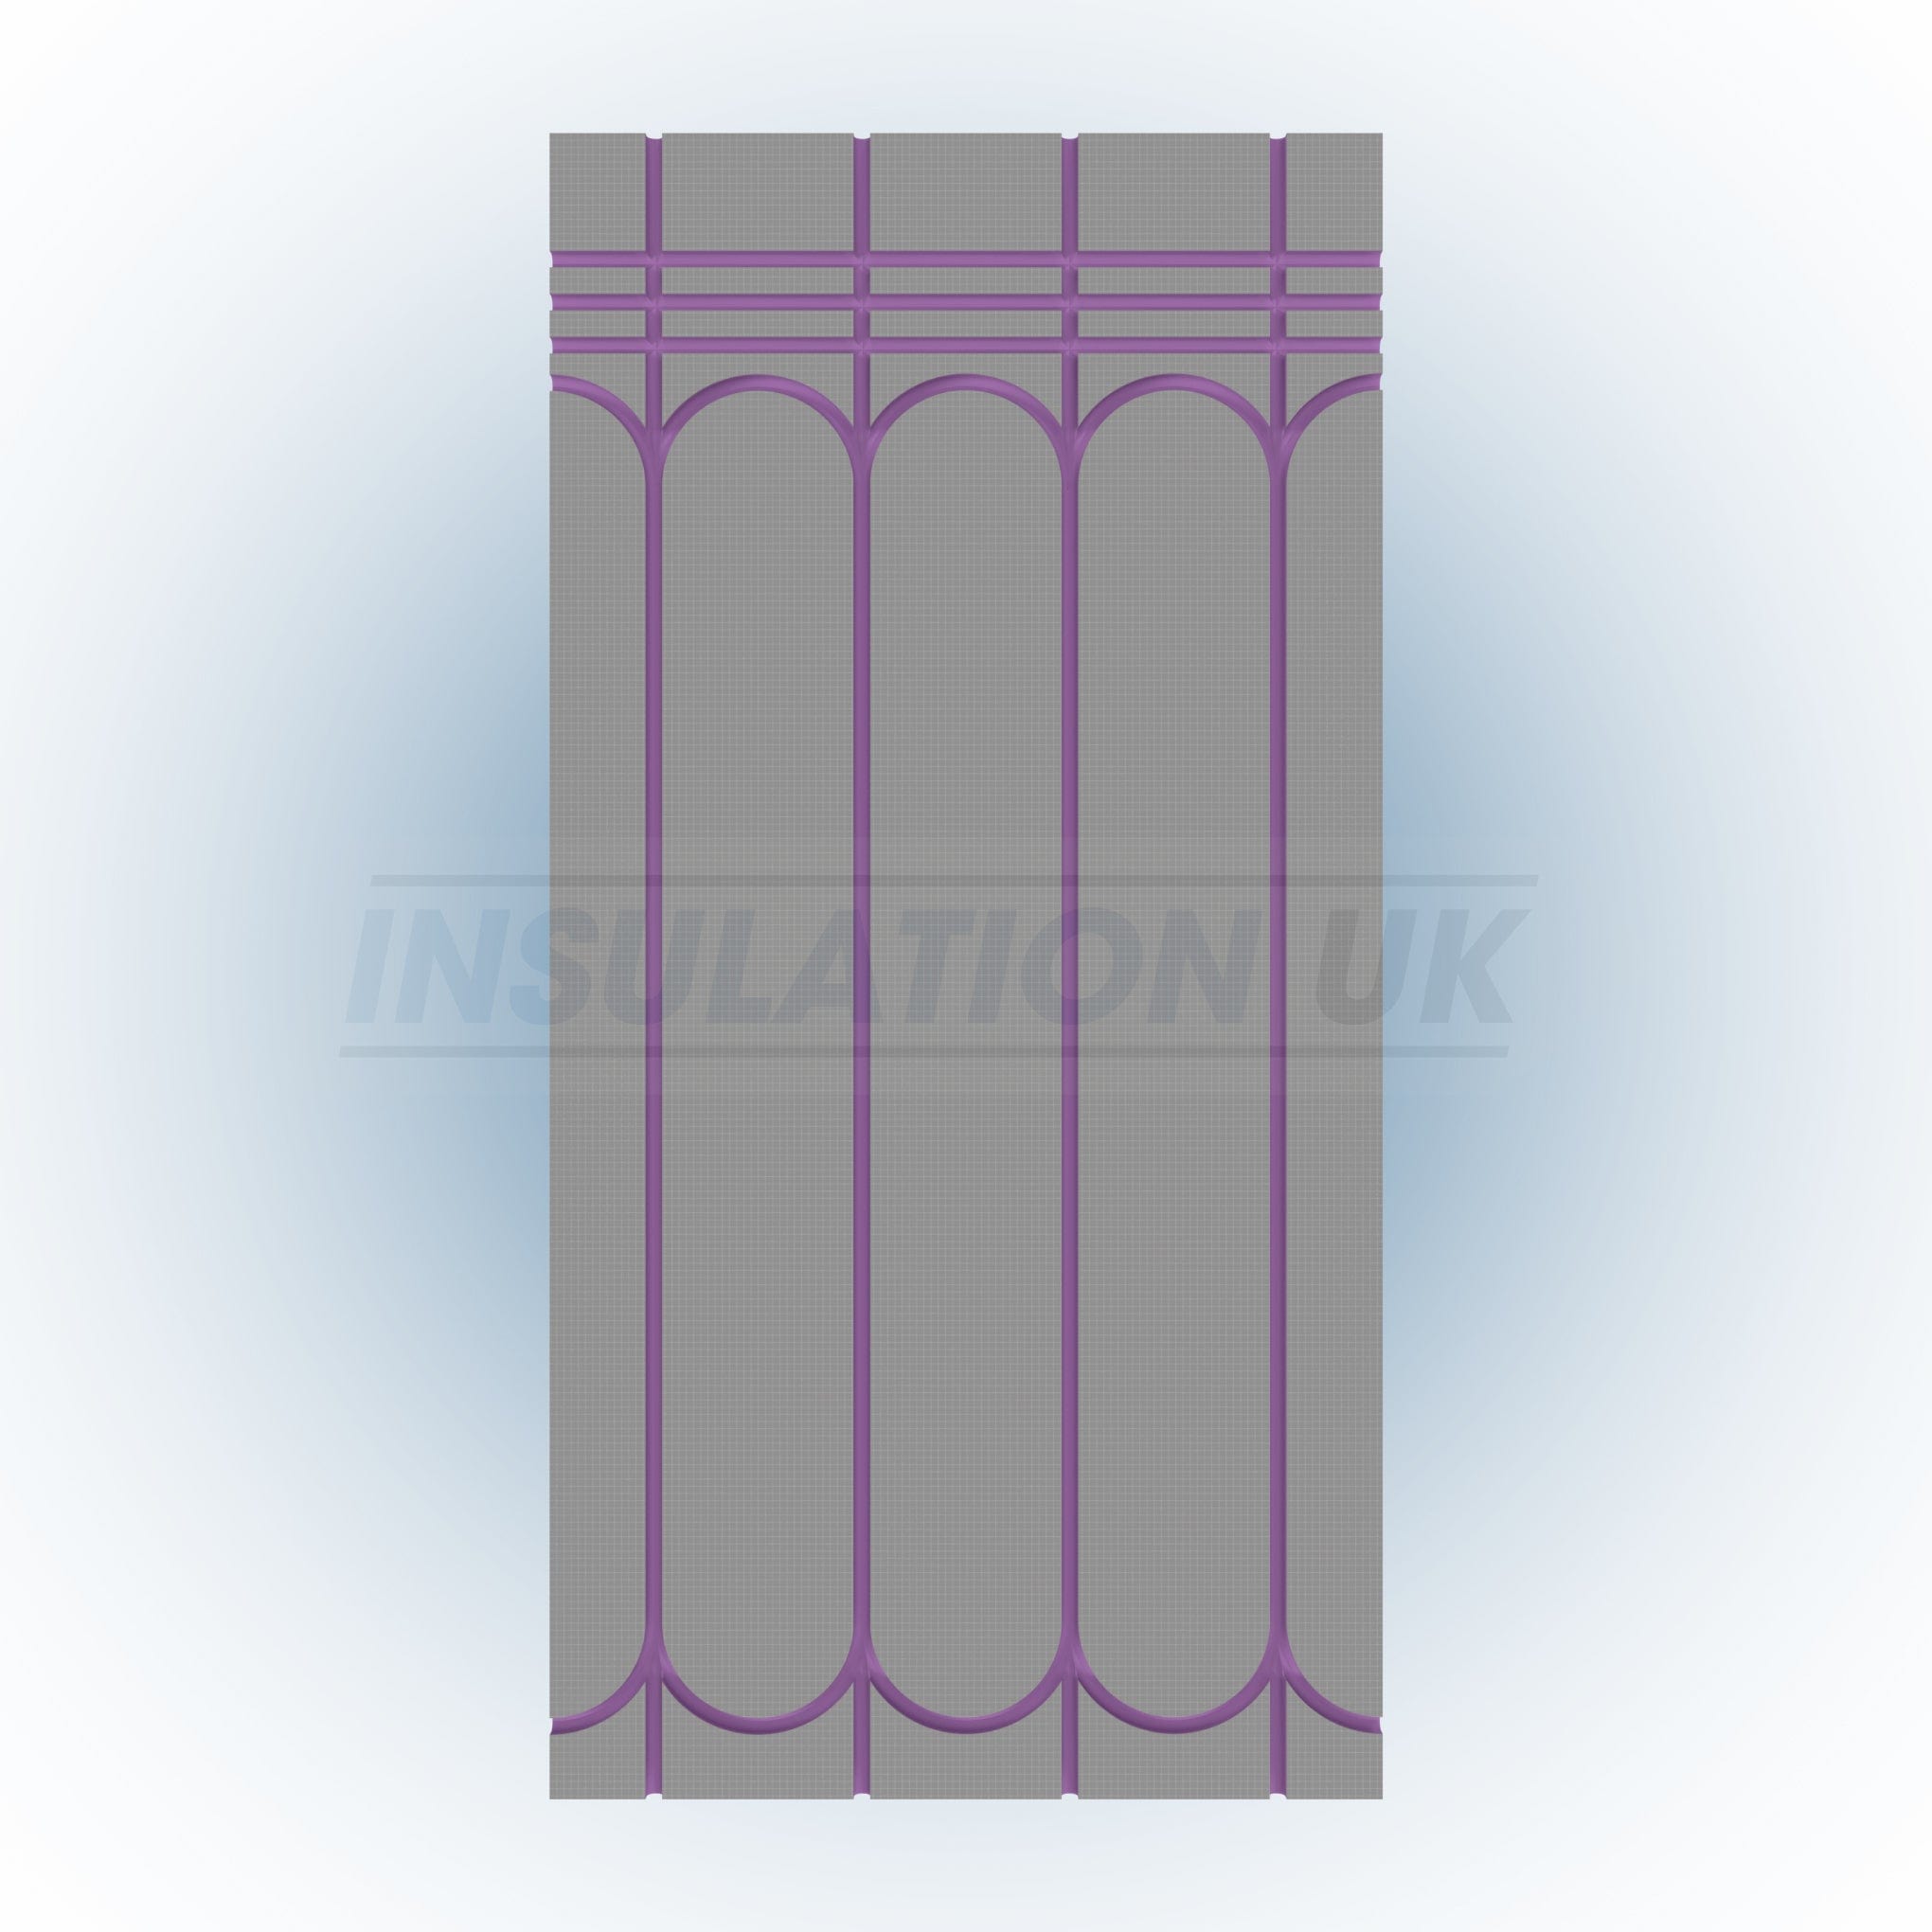 Tekwarm Insulation Tekwarm Lite Low Profile UFH Board | 1200mm x 600mm 20mm